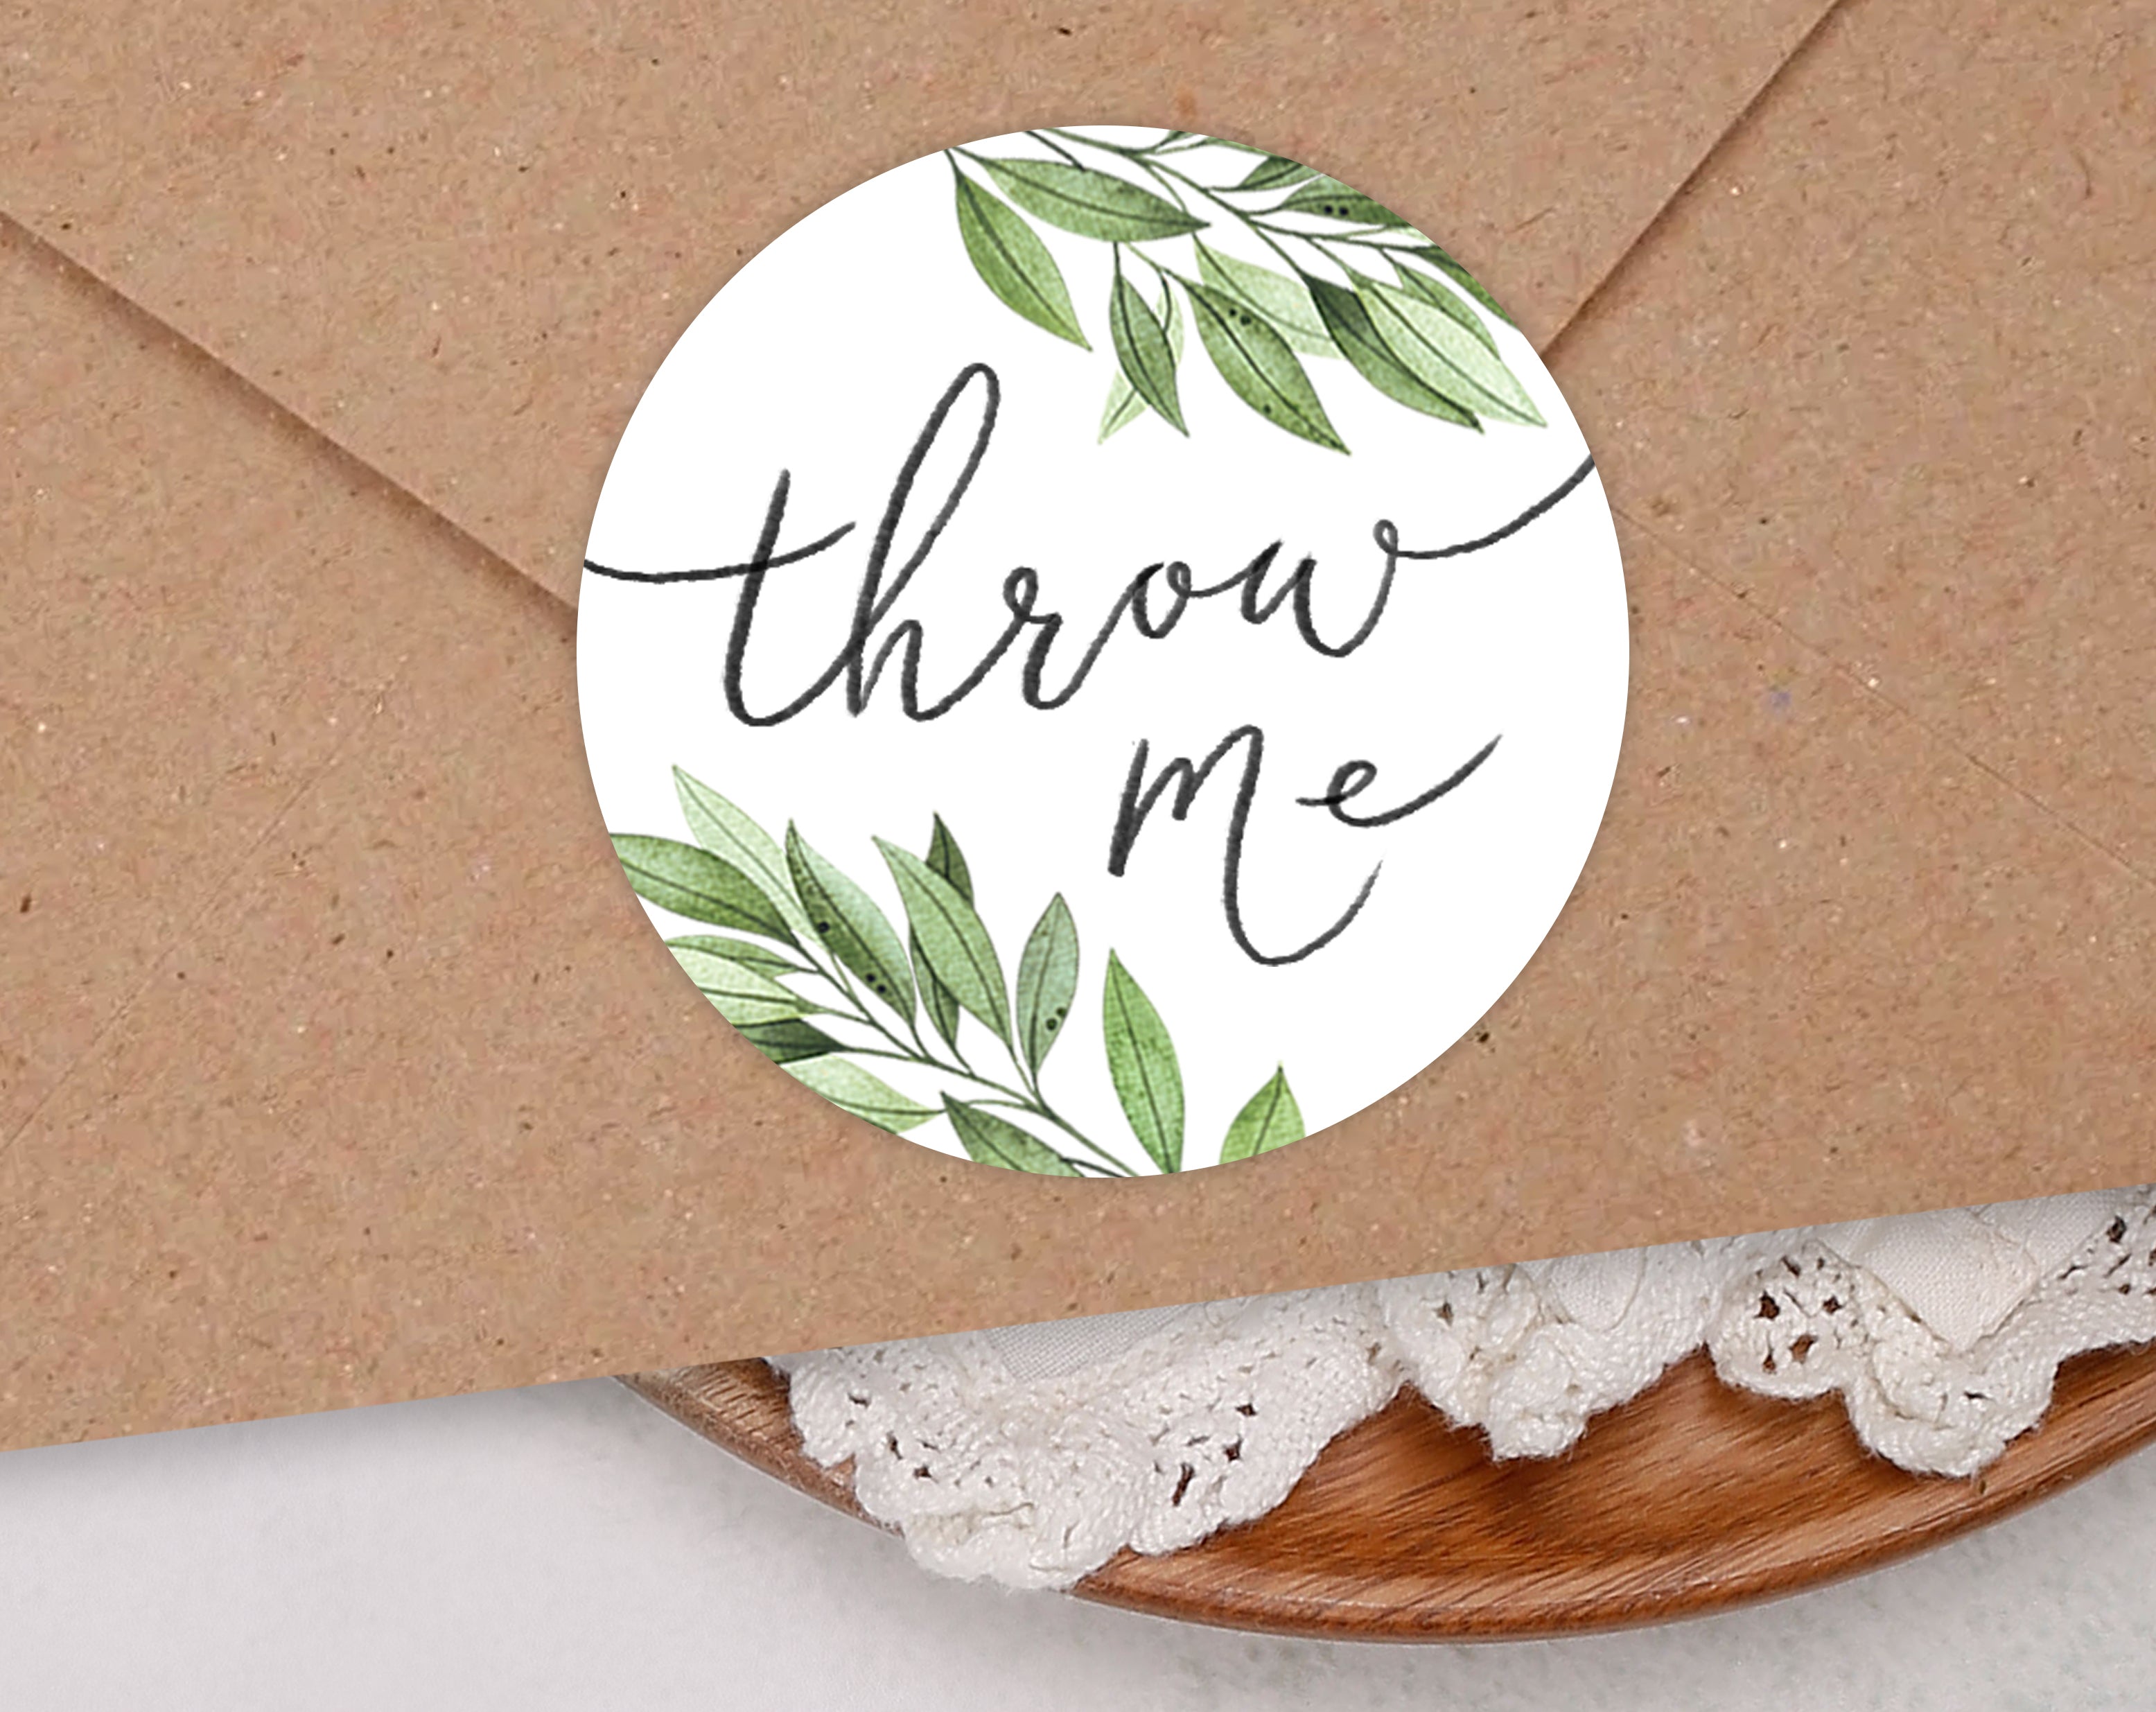 'Throw Me' Botanical Confetti Sticker Sheet